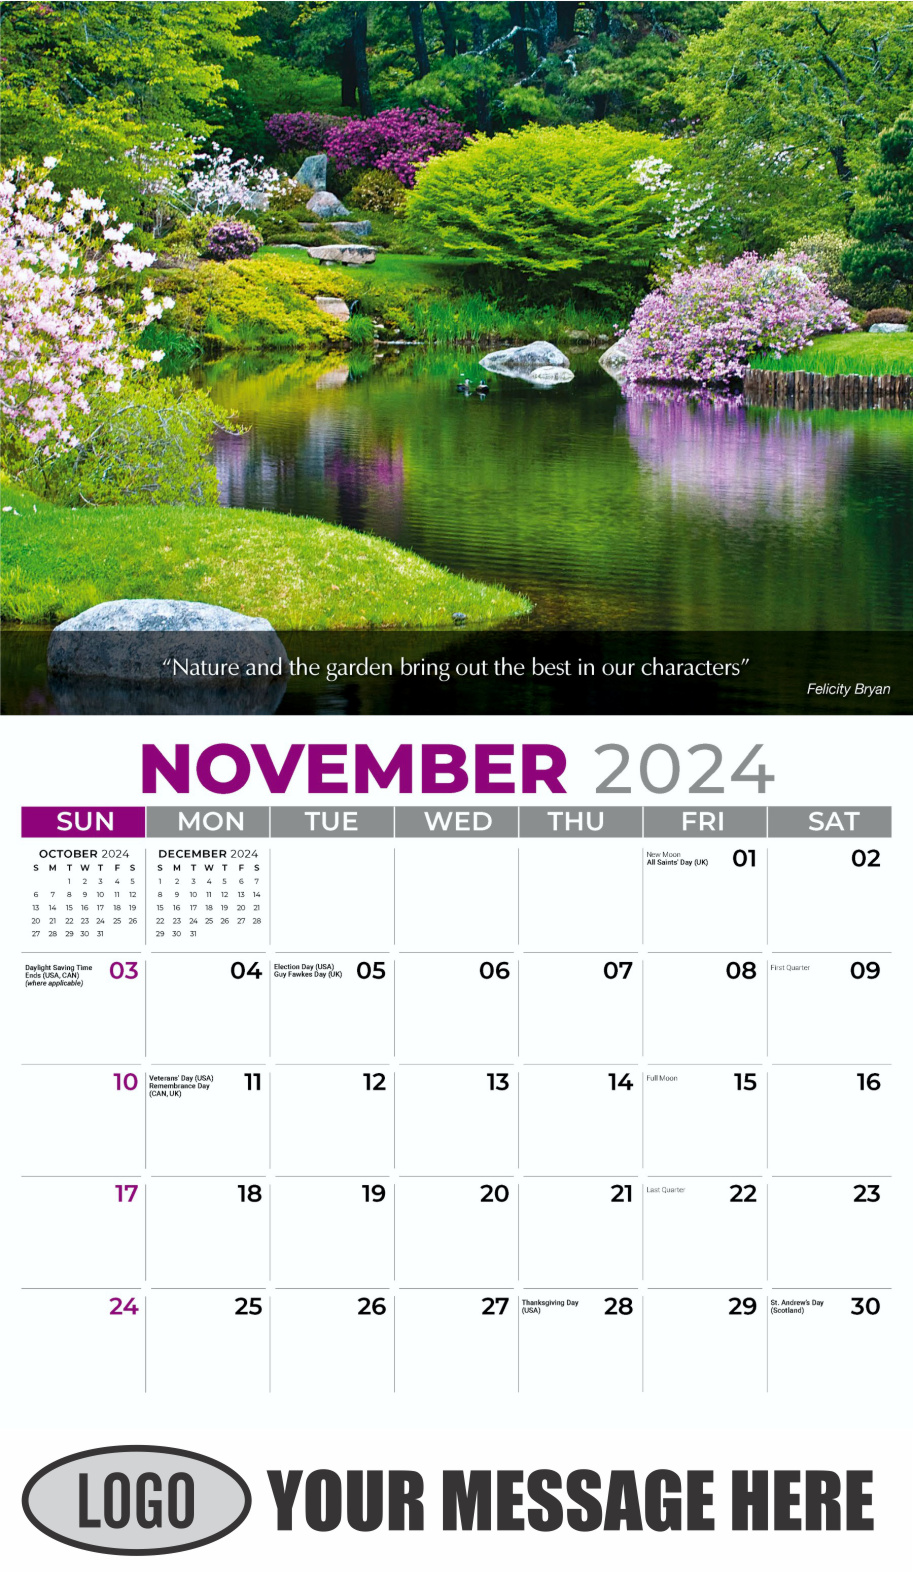 Flowers and Gardens 2024 Business Advertising Calendar - November